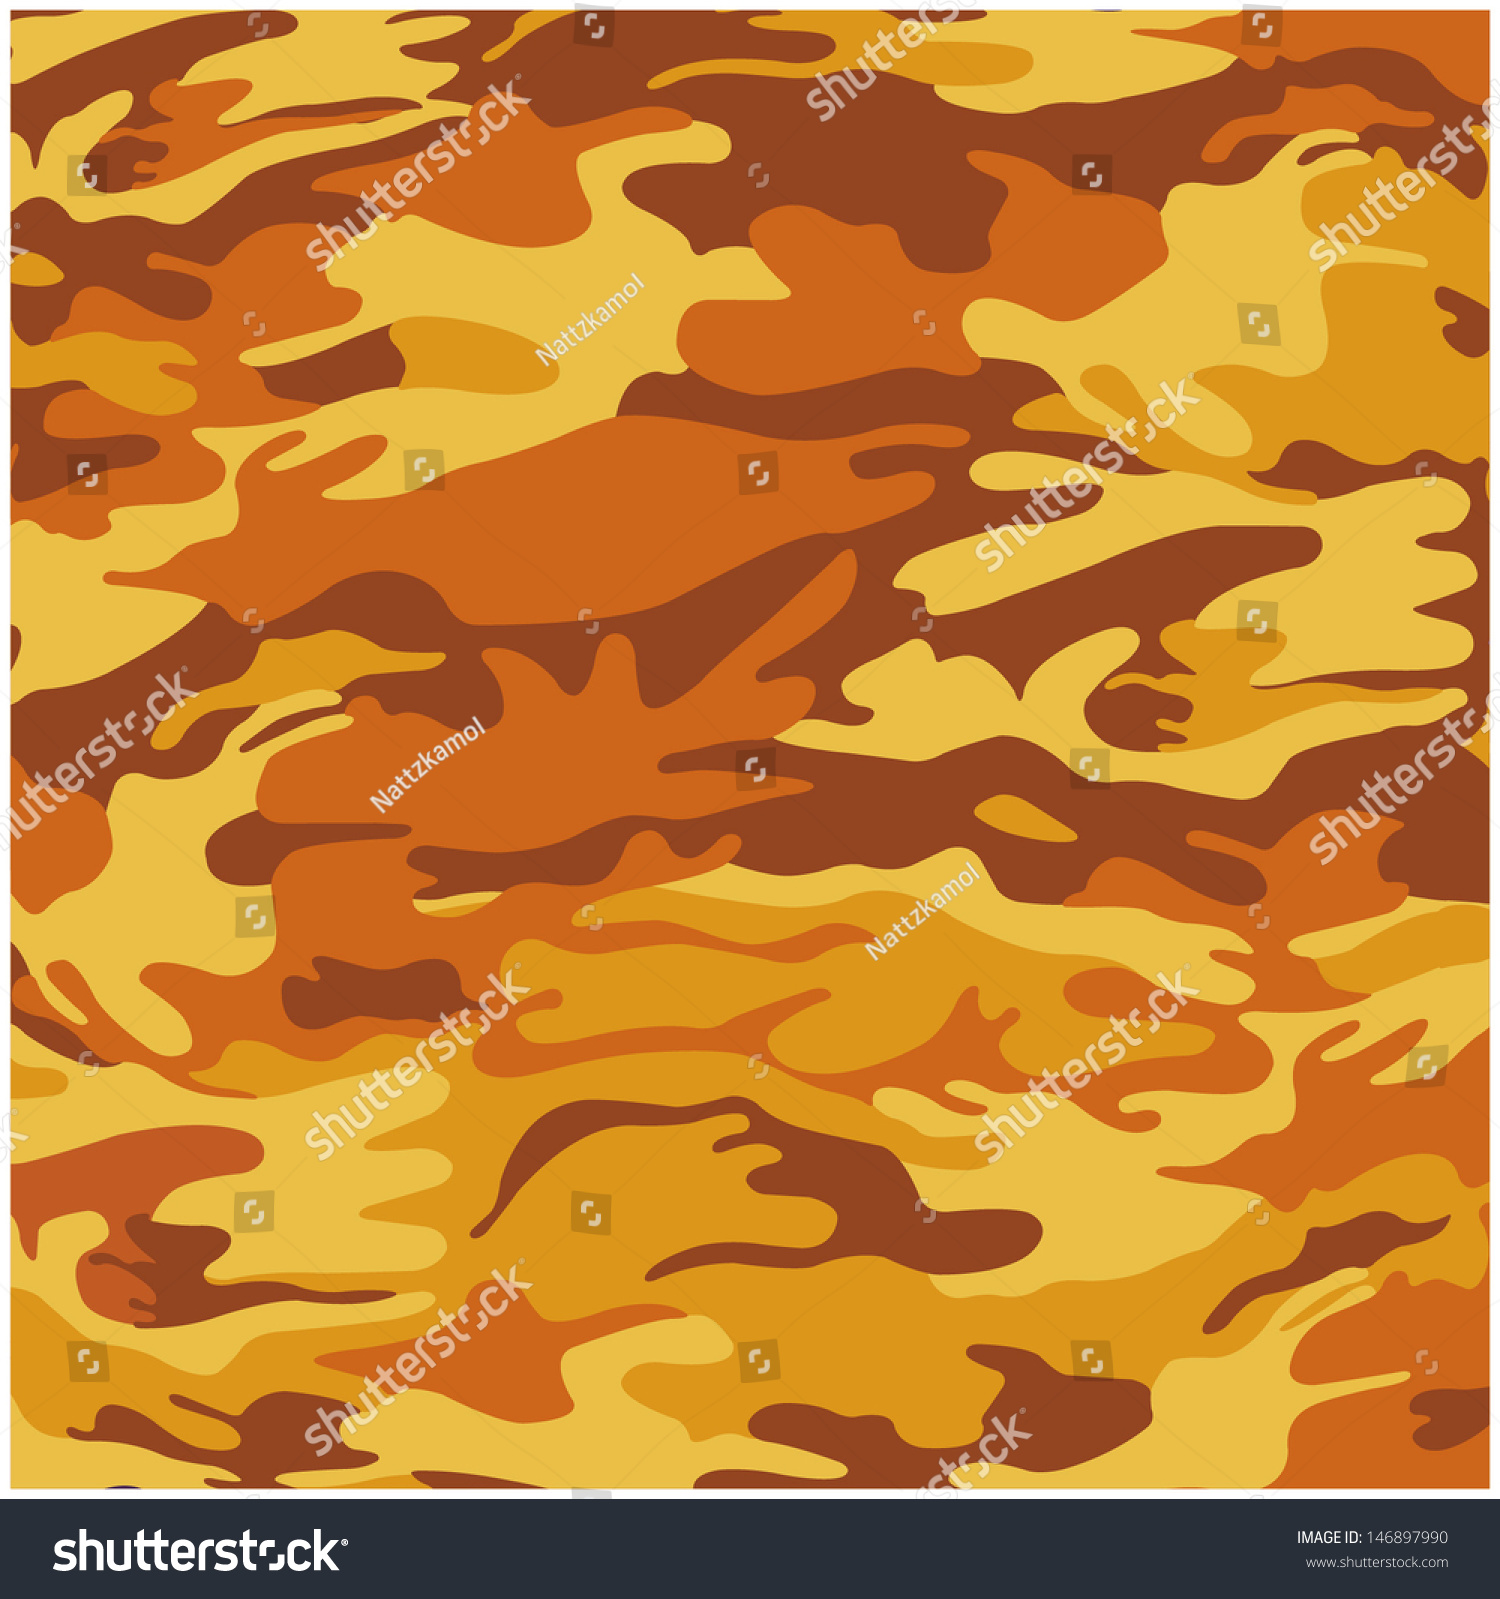 Military Camouflage Orange Background Stock Vector Illustration ...